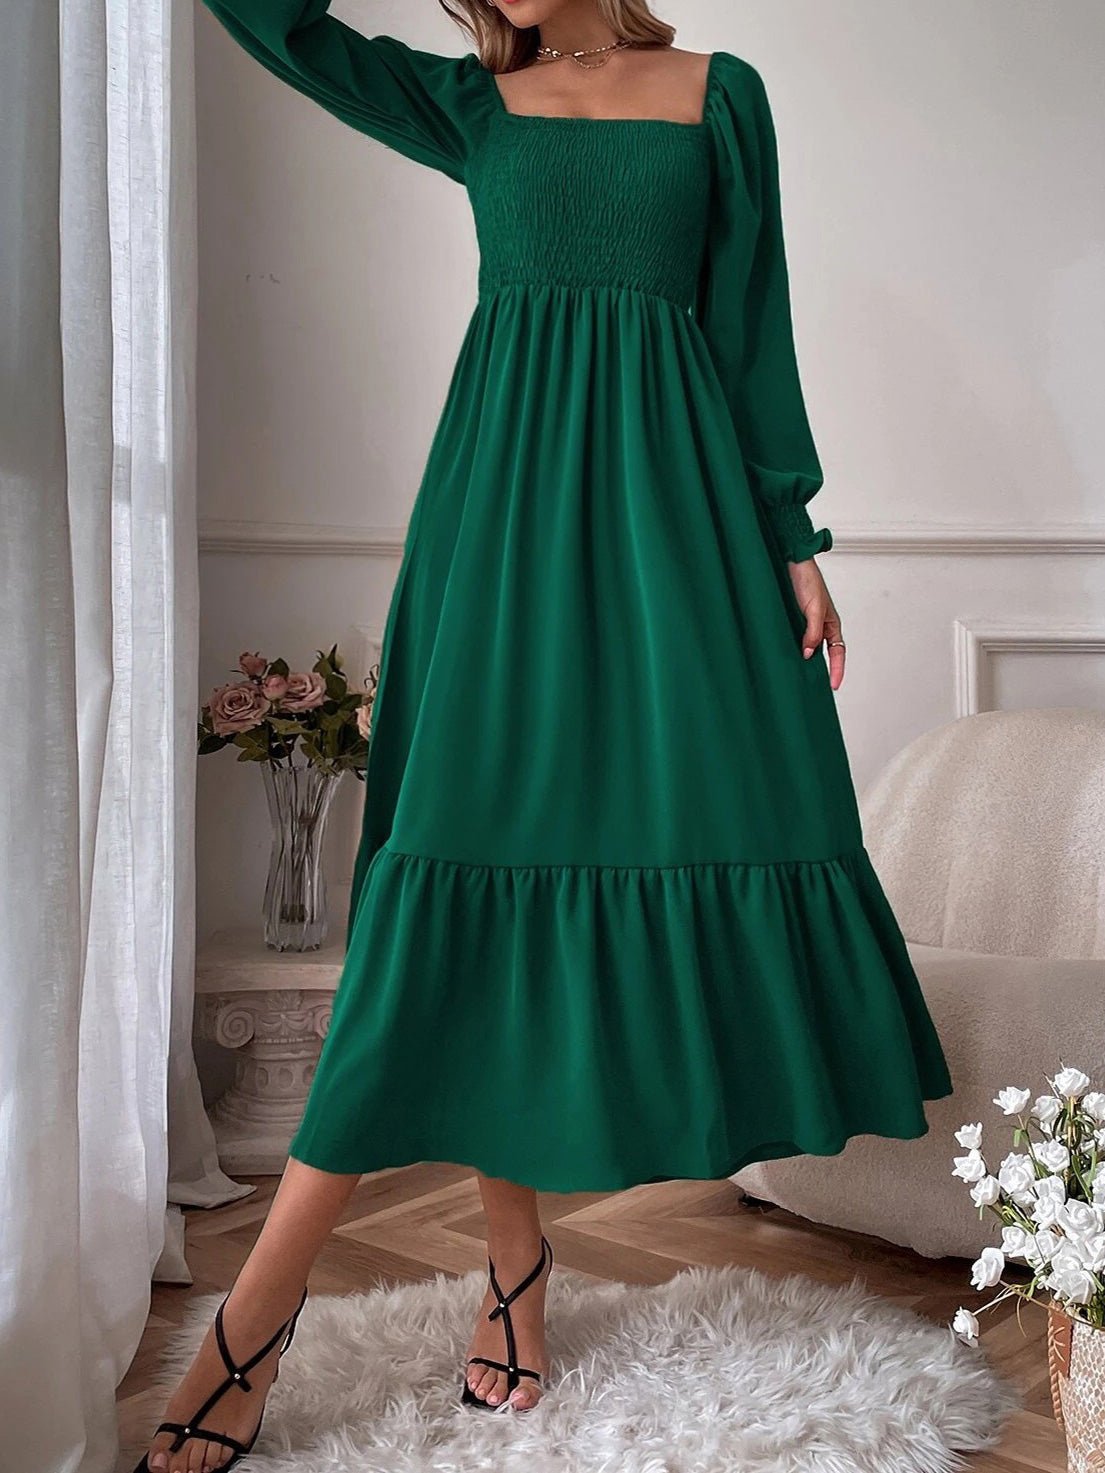 Maxi Dresses - Square Neck High Waist Long Sleeve Ruffle Dress - MsDressly